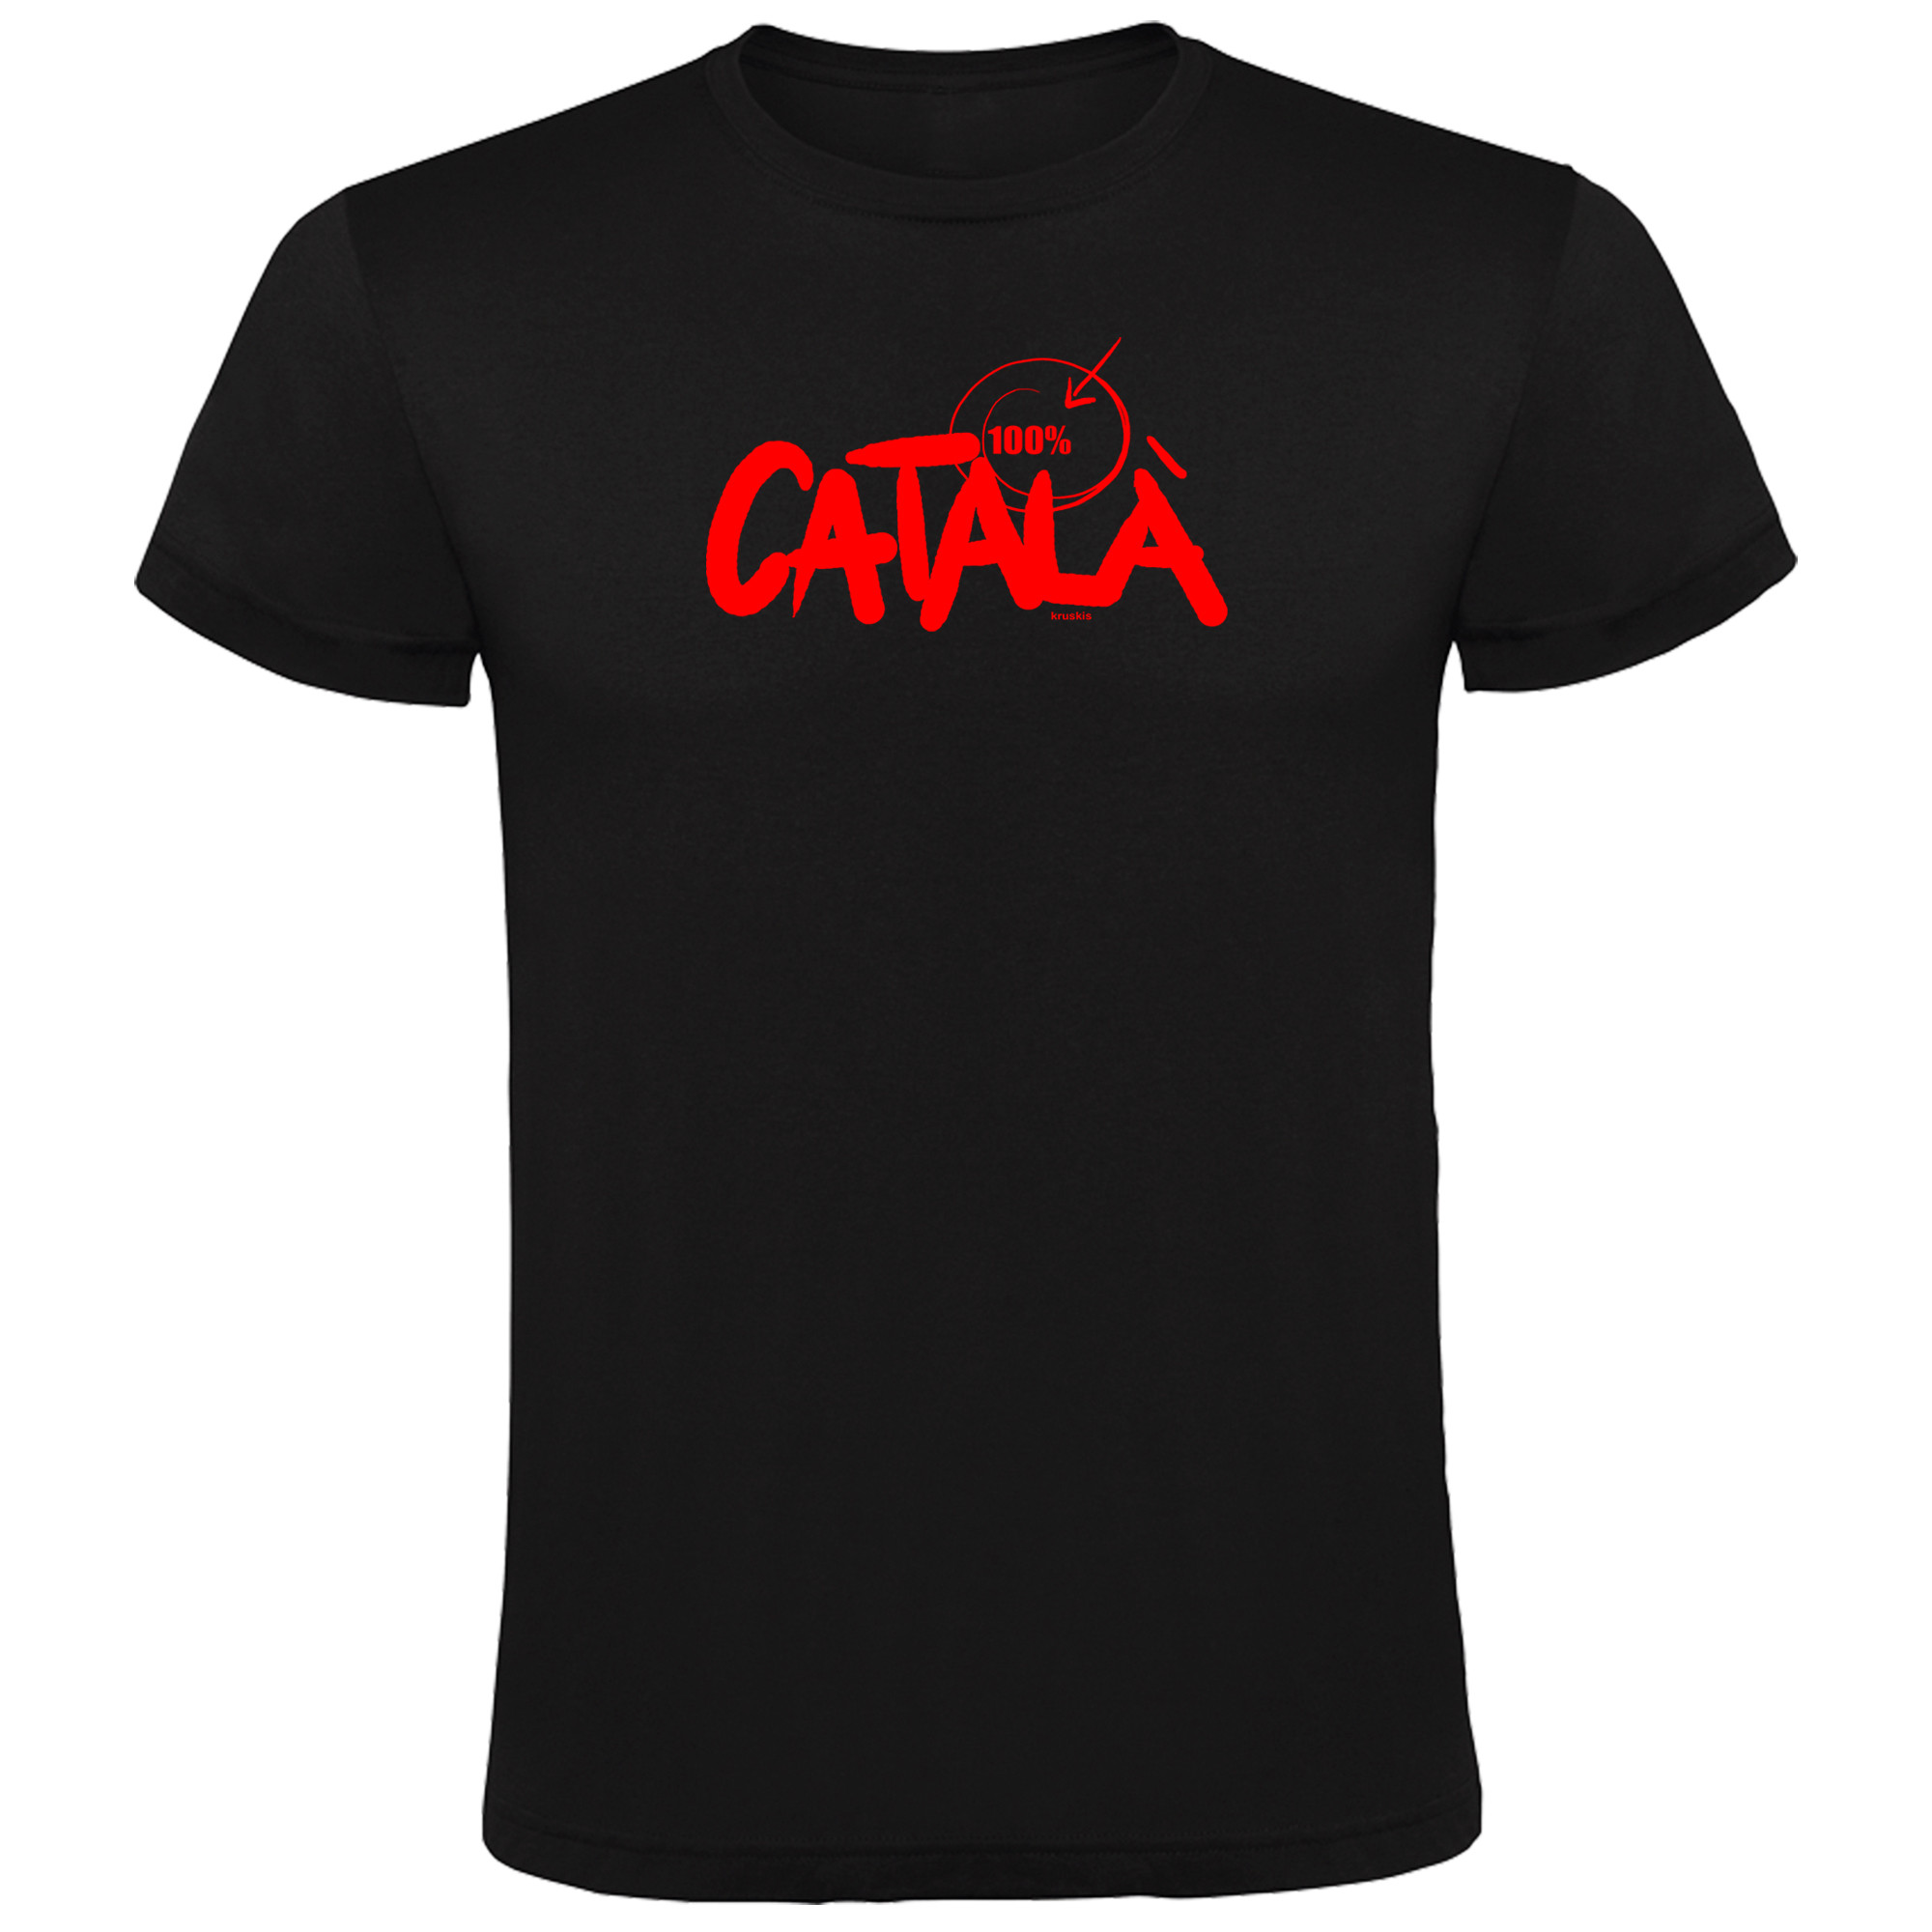 T Shirt Catalonie 100% Catala Korte Mouwen Man